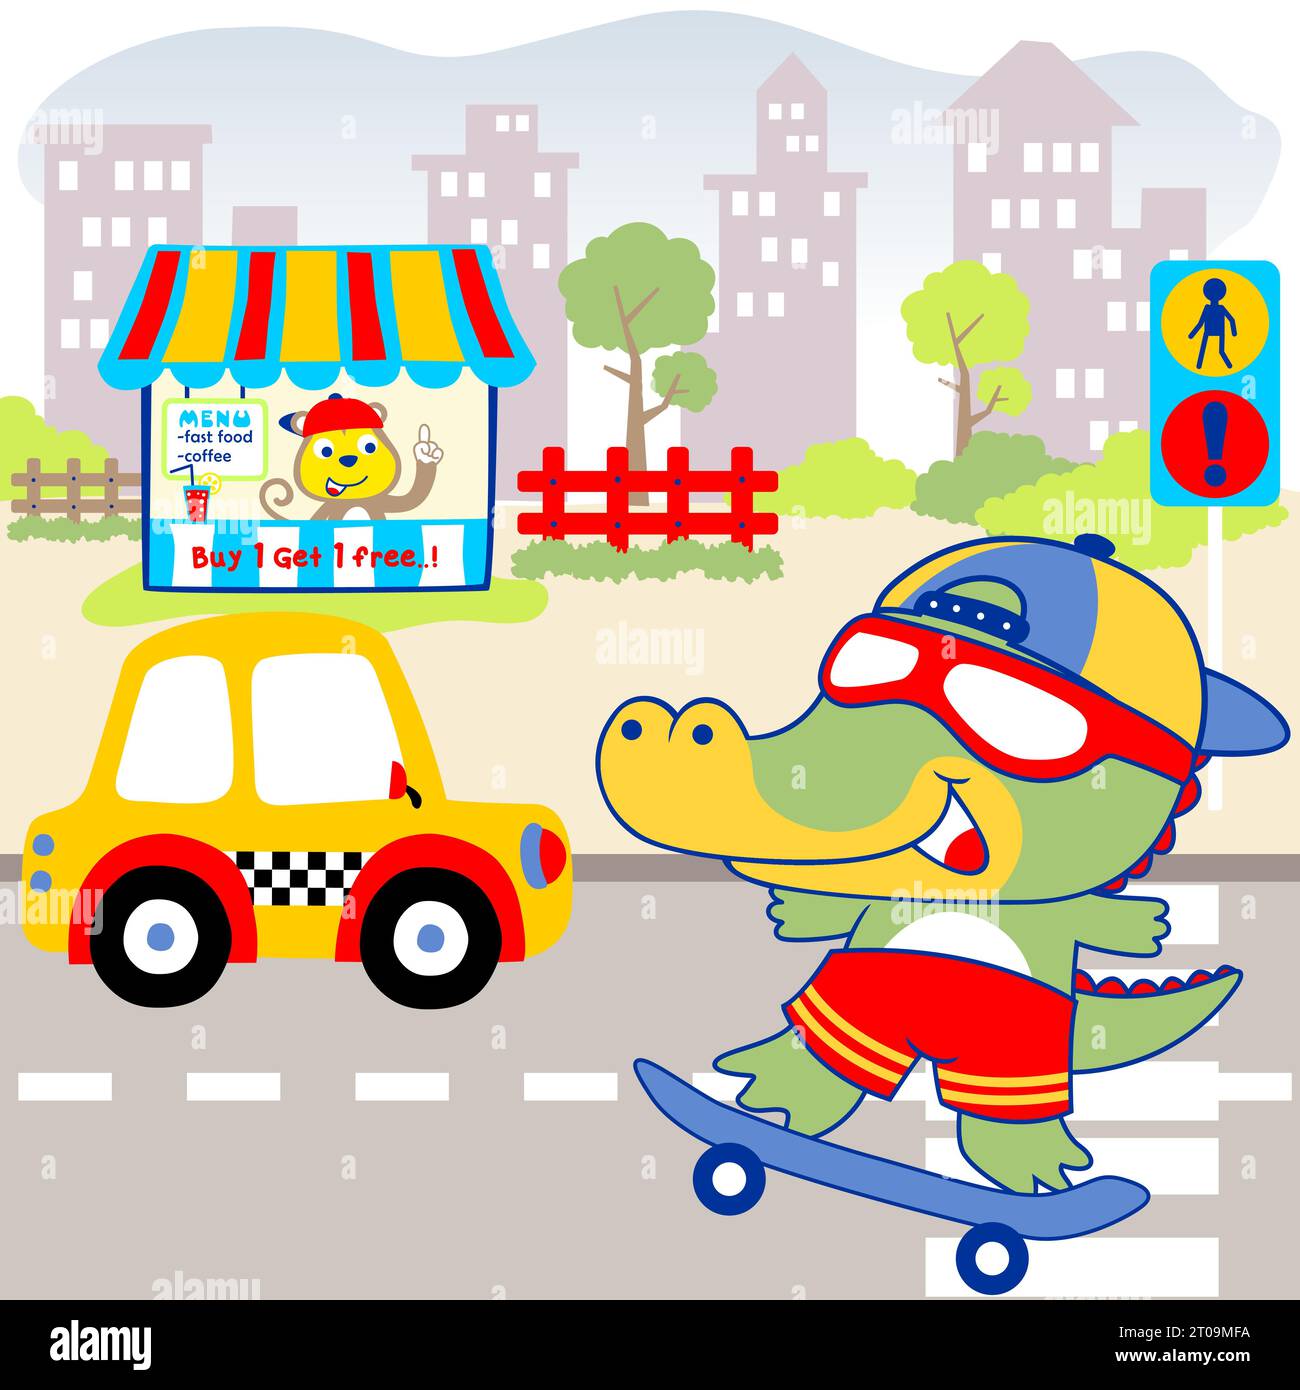 Little crocodile playing skateboard in city road, city life elements, vector cartoon illustration Stock Vector